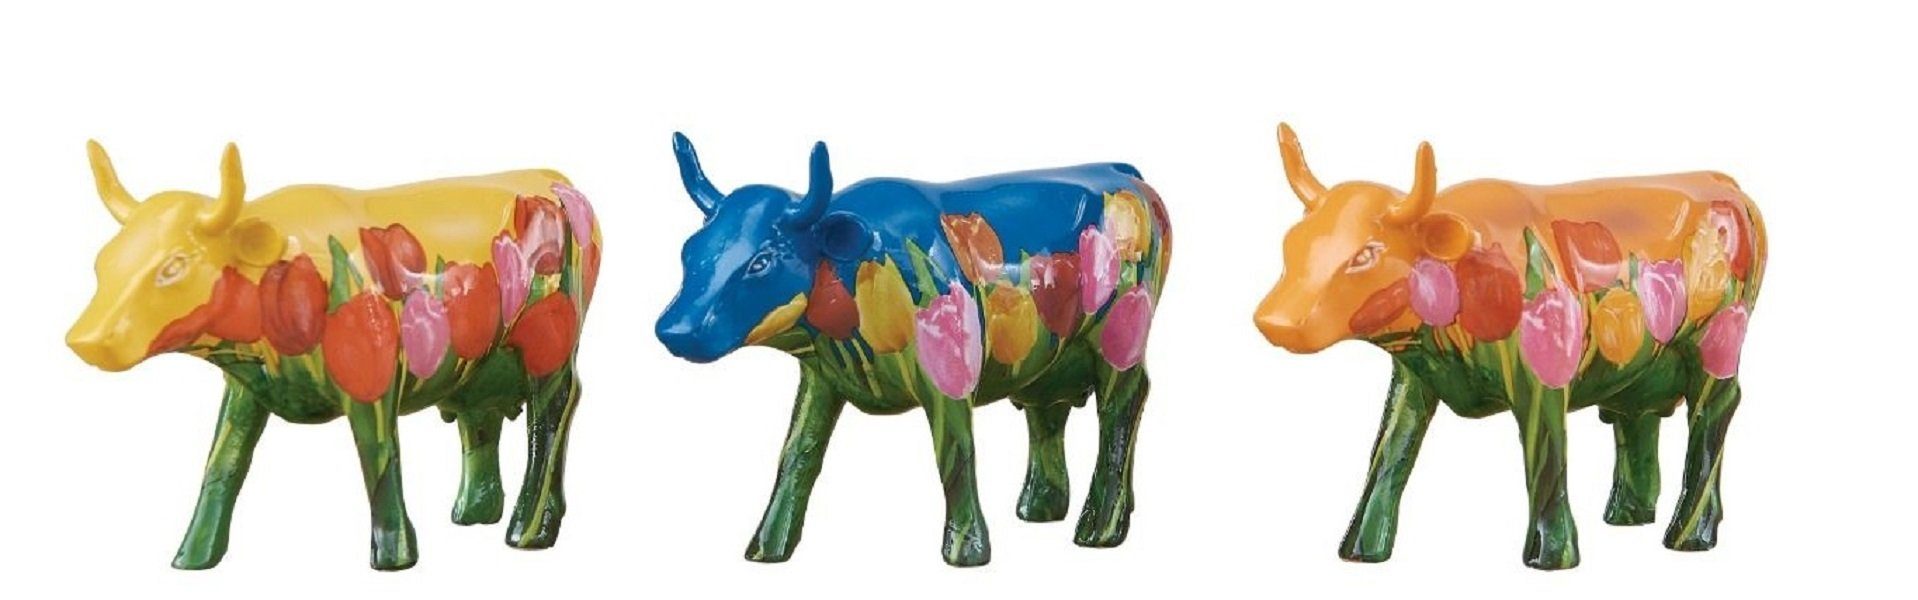 CowParade Tierfigur - Tulips - Pack Art 3 Cowparade Pack